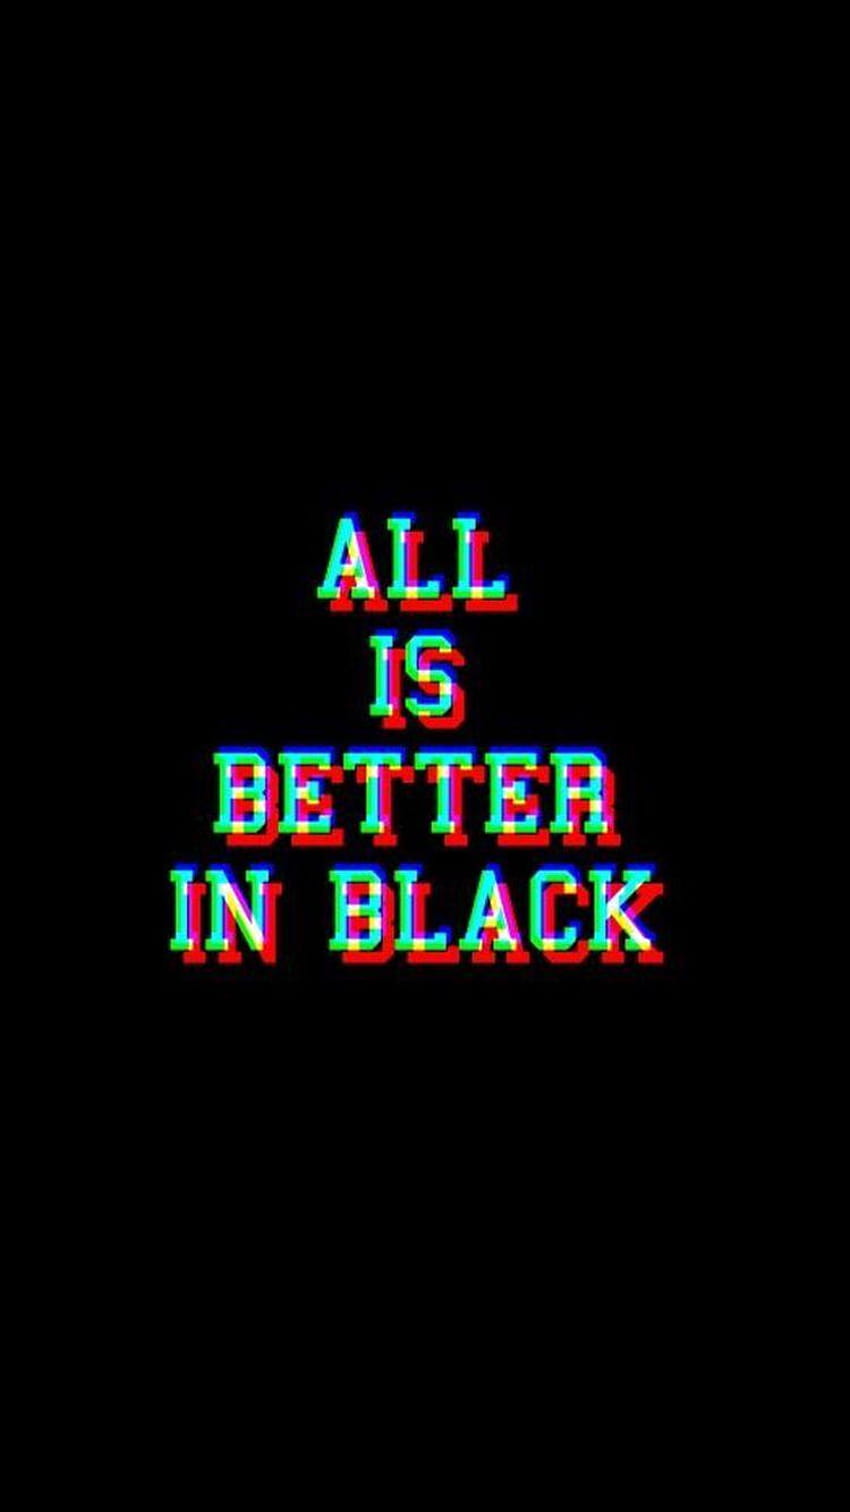 All is better in black - Black glitch